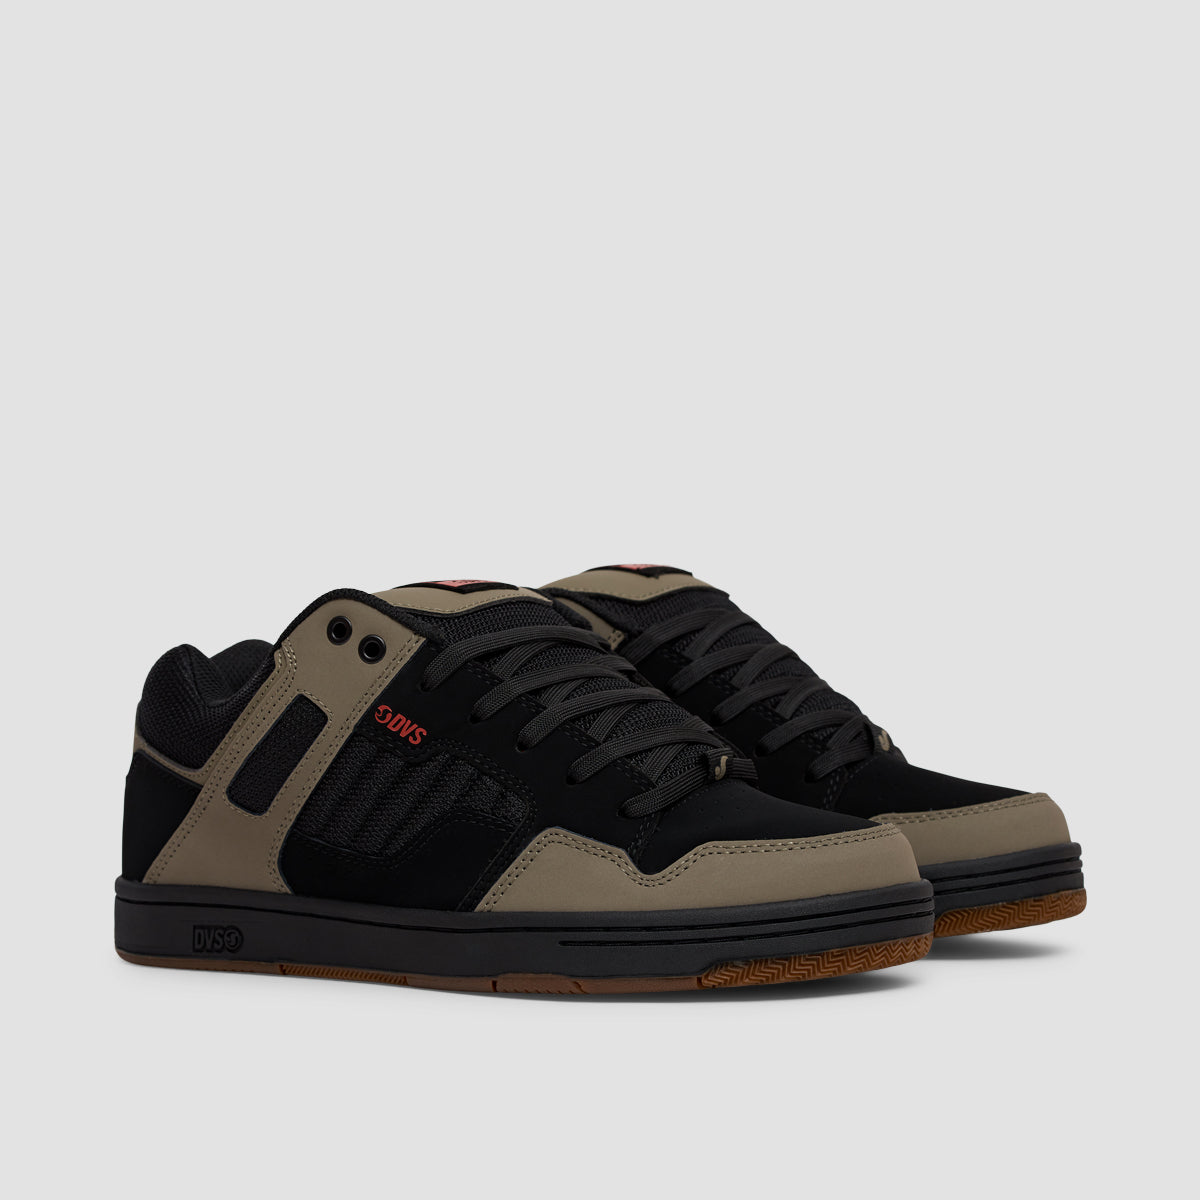 DVS Enduro 125 Lutzka Shoes - Brindle/Black/Red Nubuck